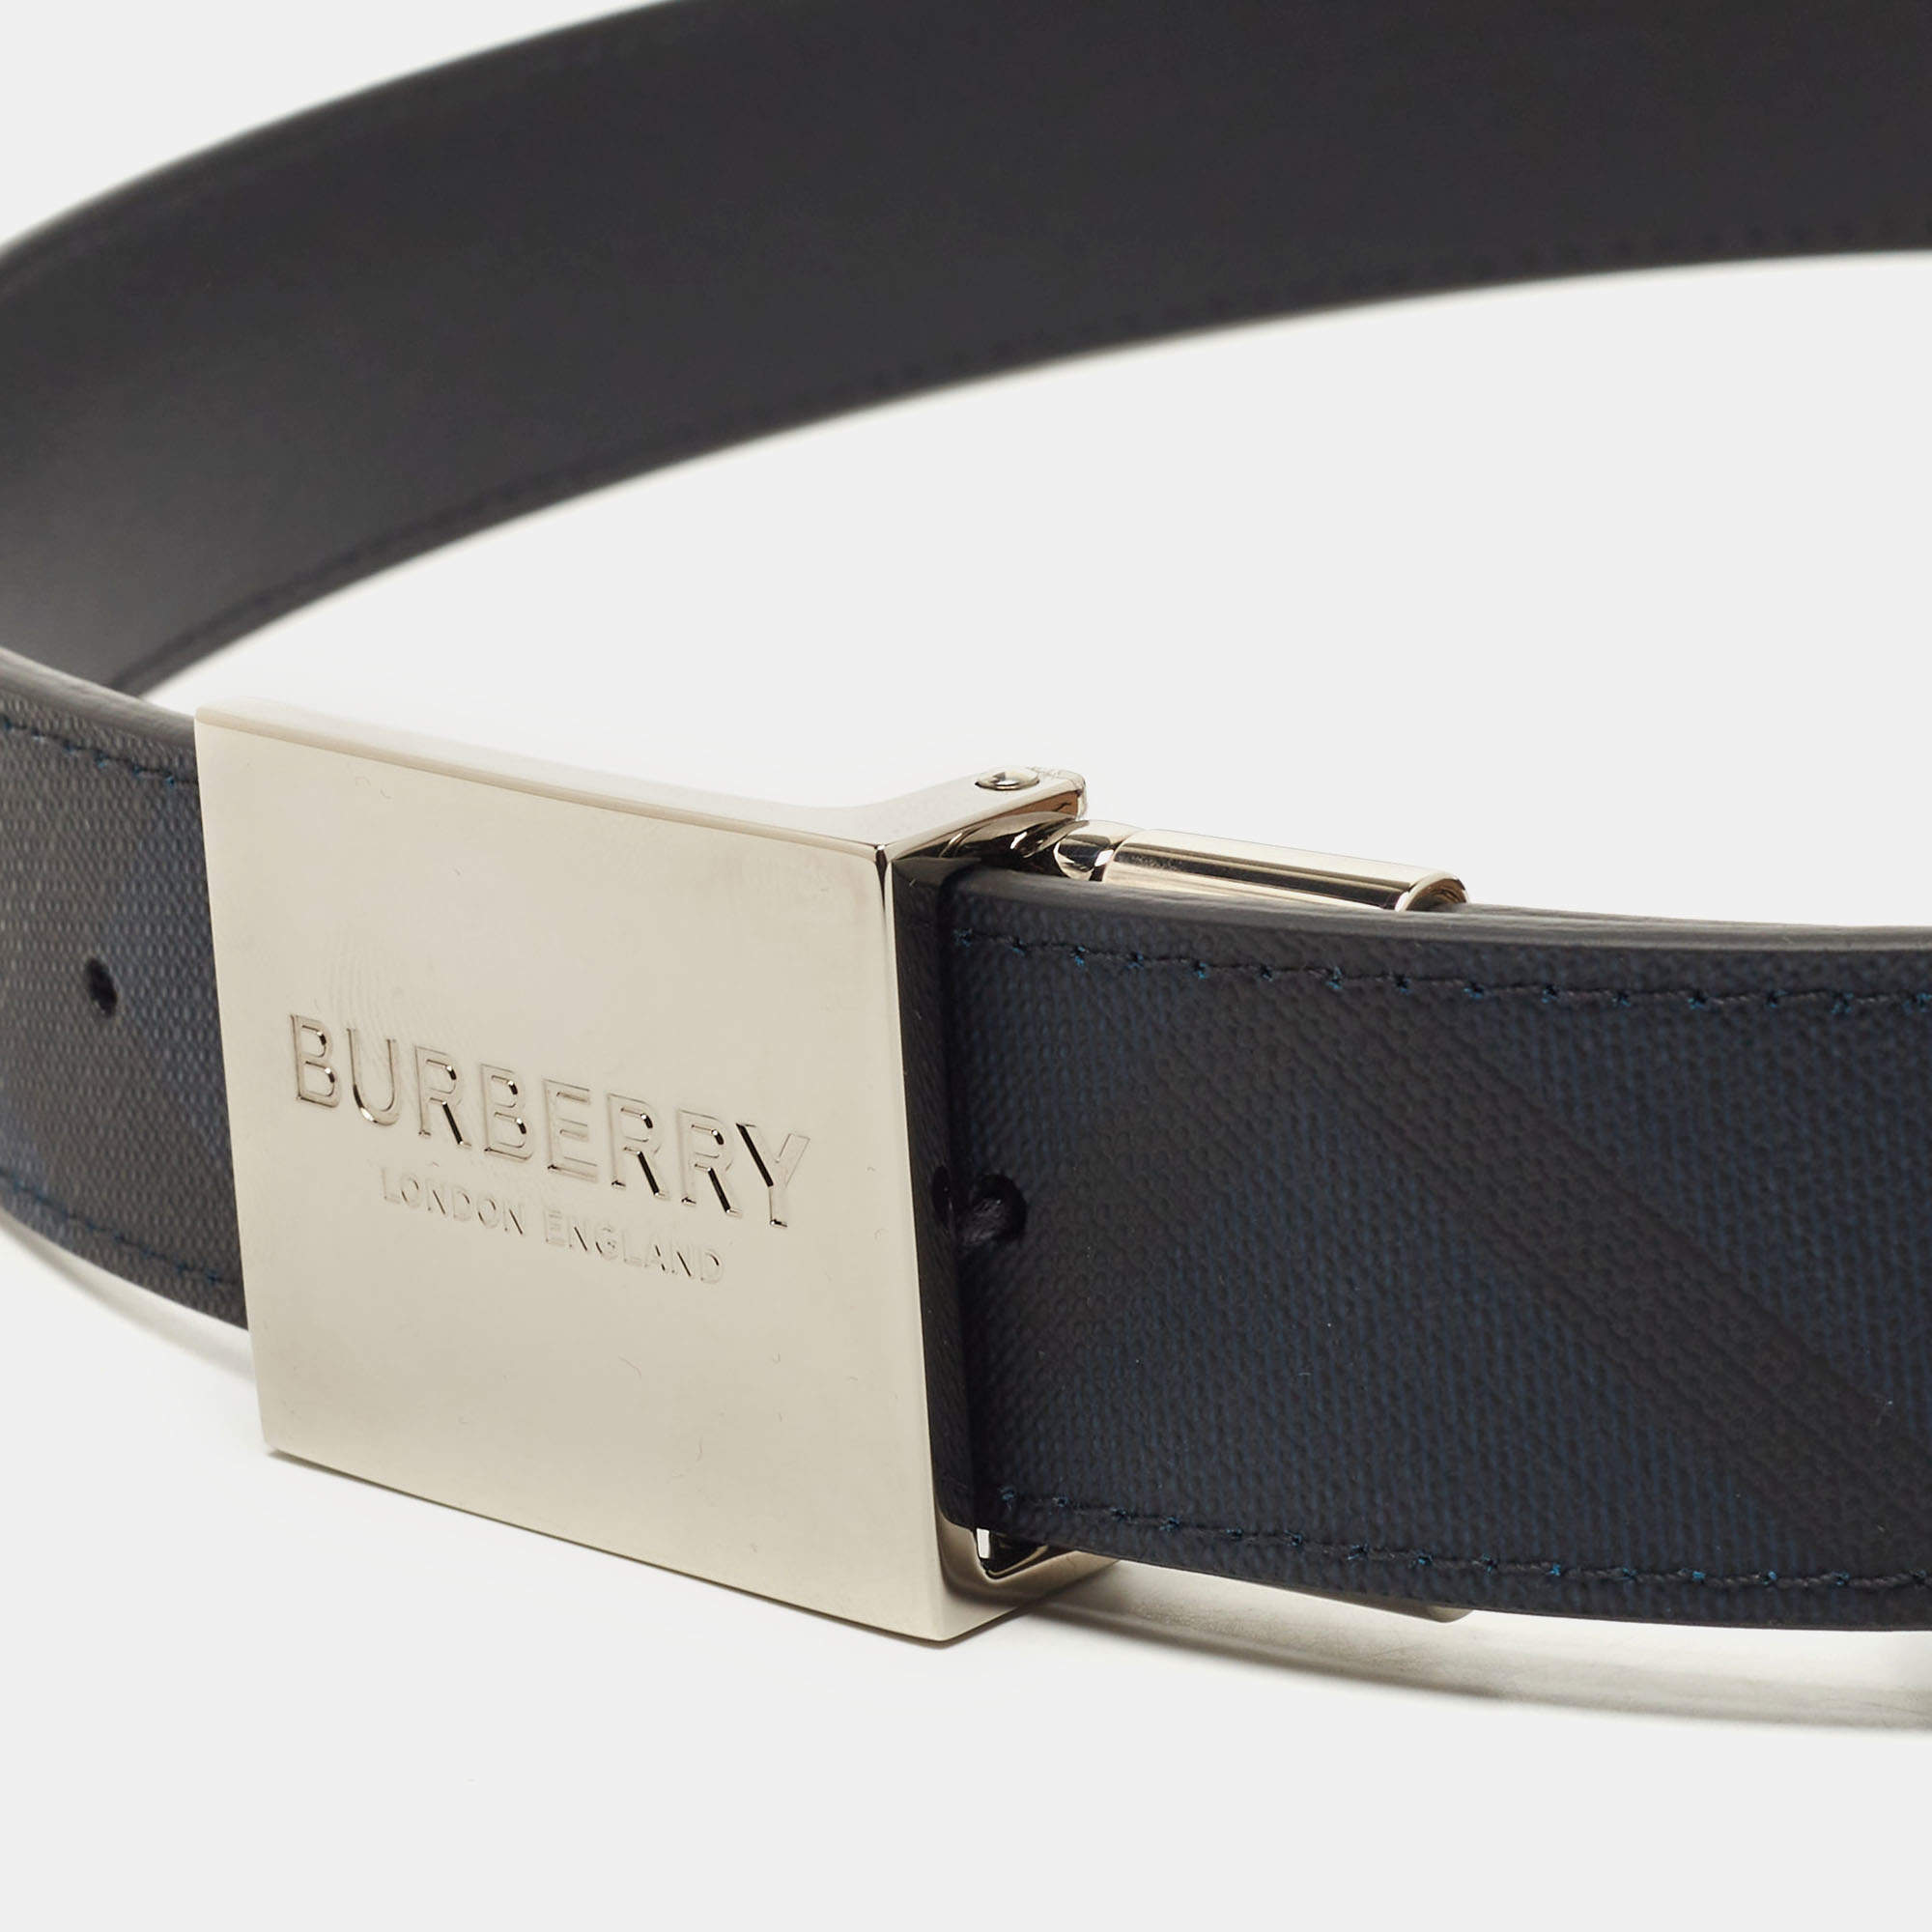 Men's Check Plaque Belt - Burberry Series Ep. 1 